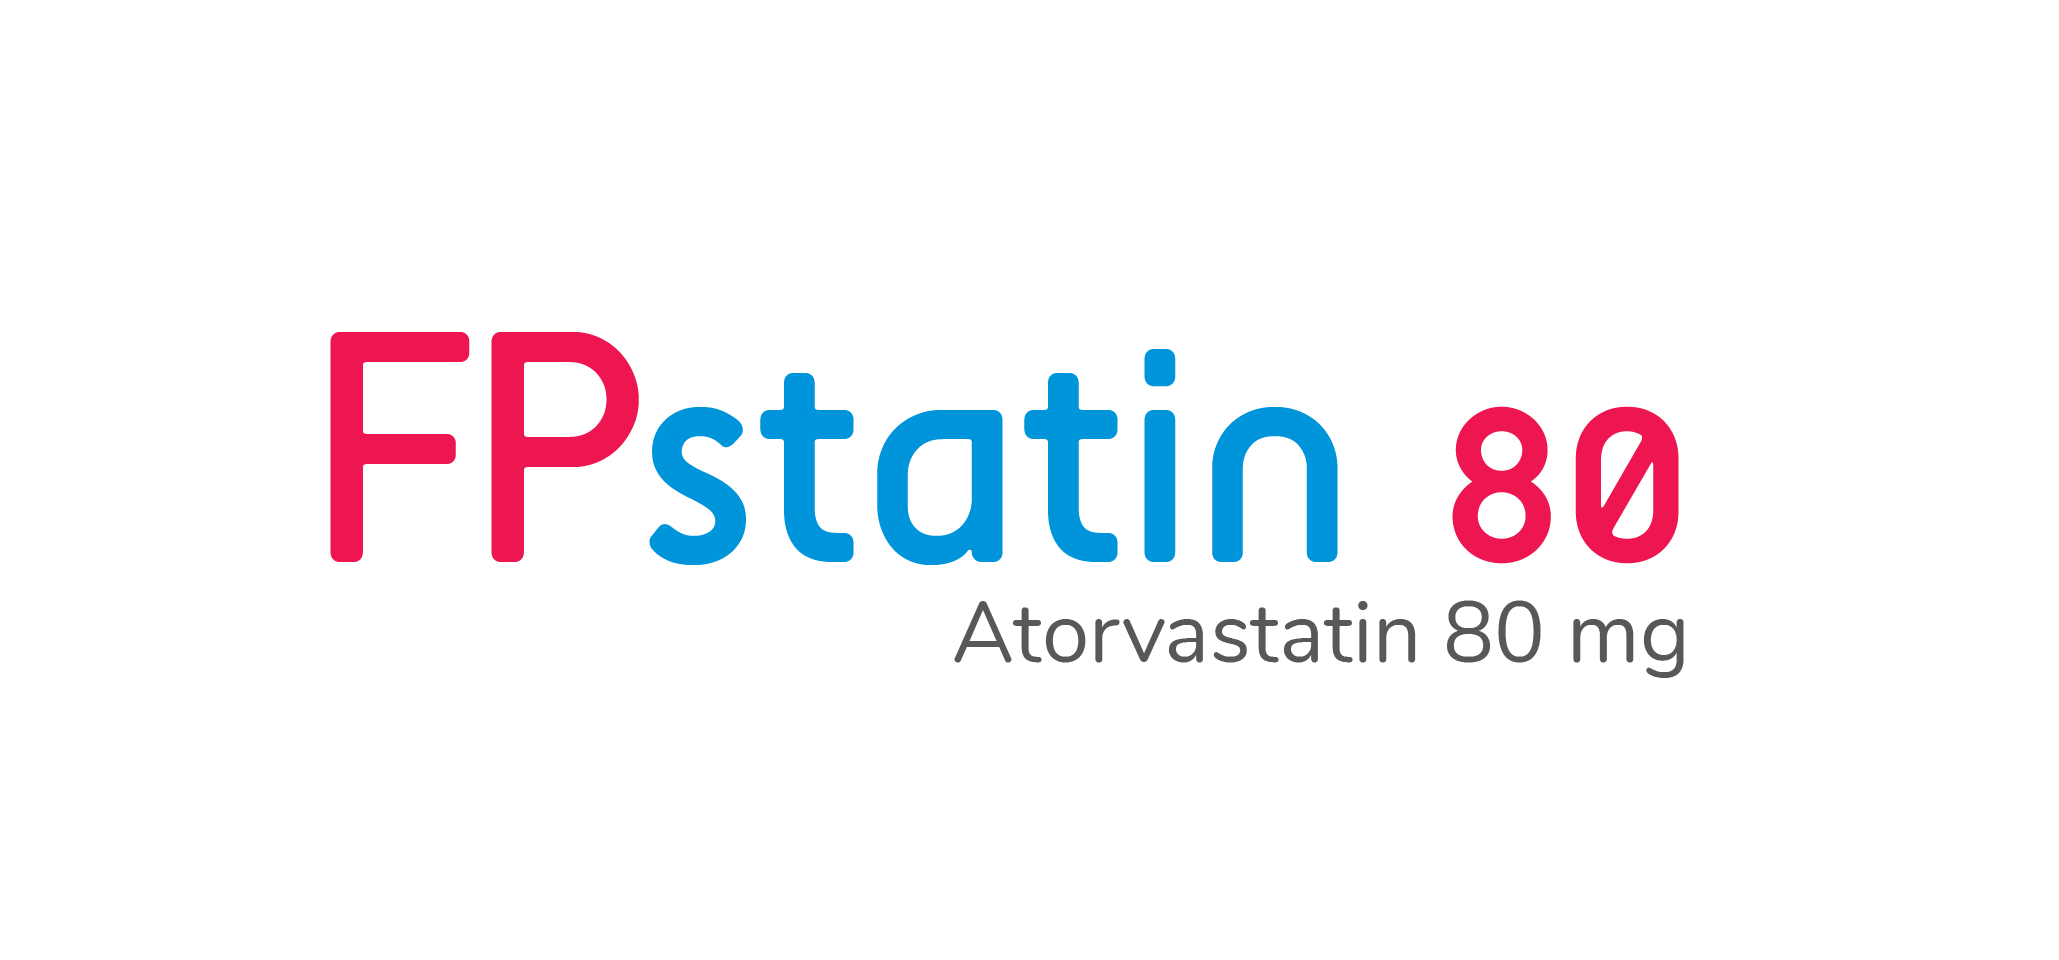 FP Statin 80 | Atorvastatin 80 mg